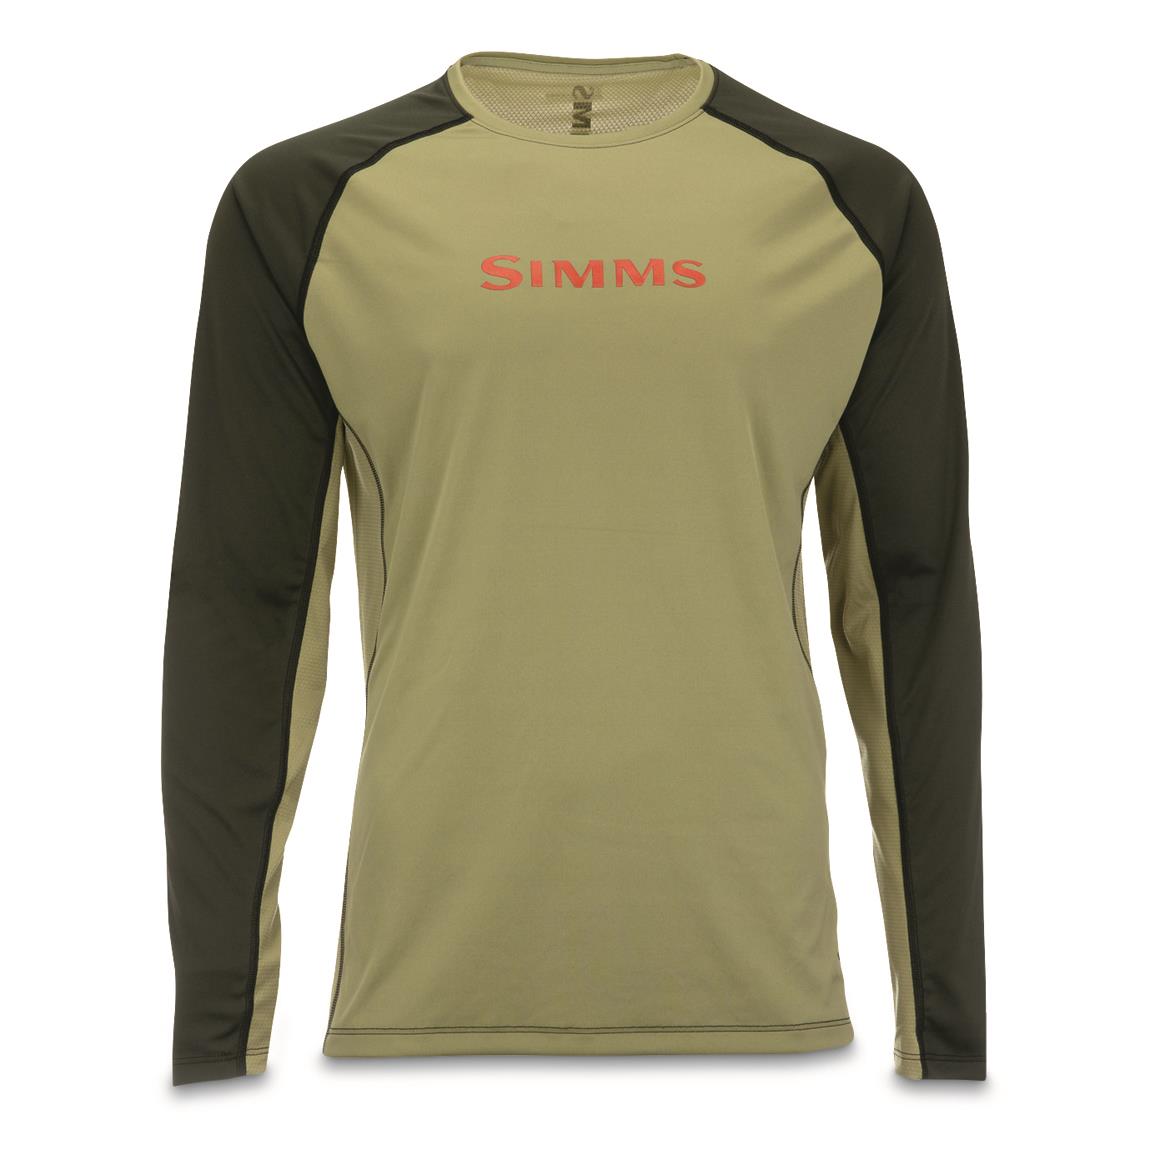 Simms Men's SolarVent Crew Neck Shirt, Foliage/sage